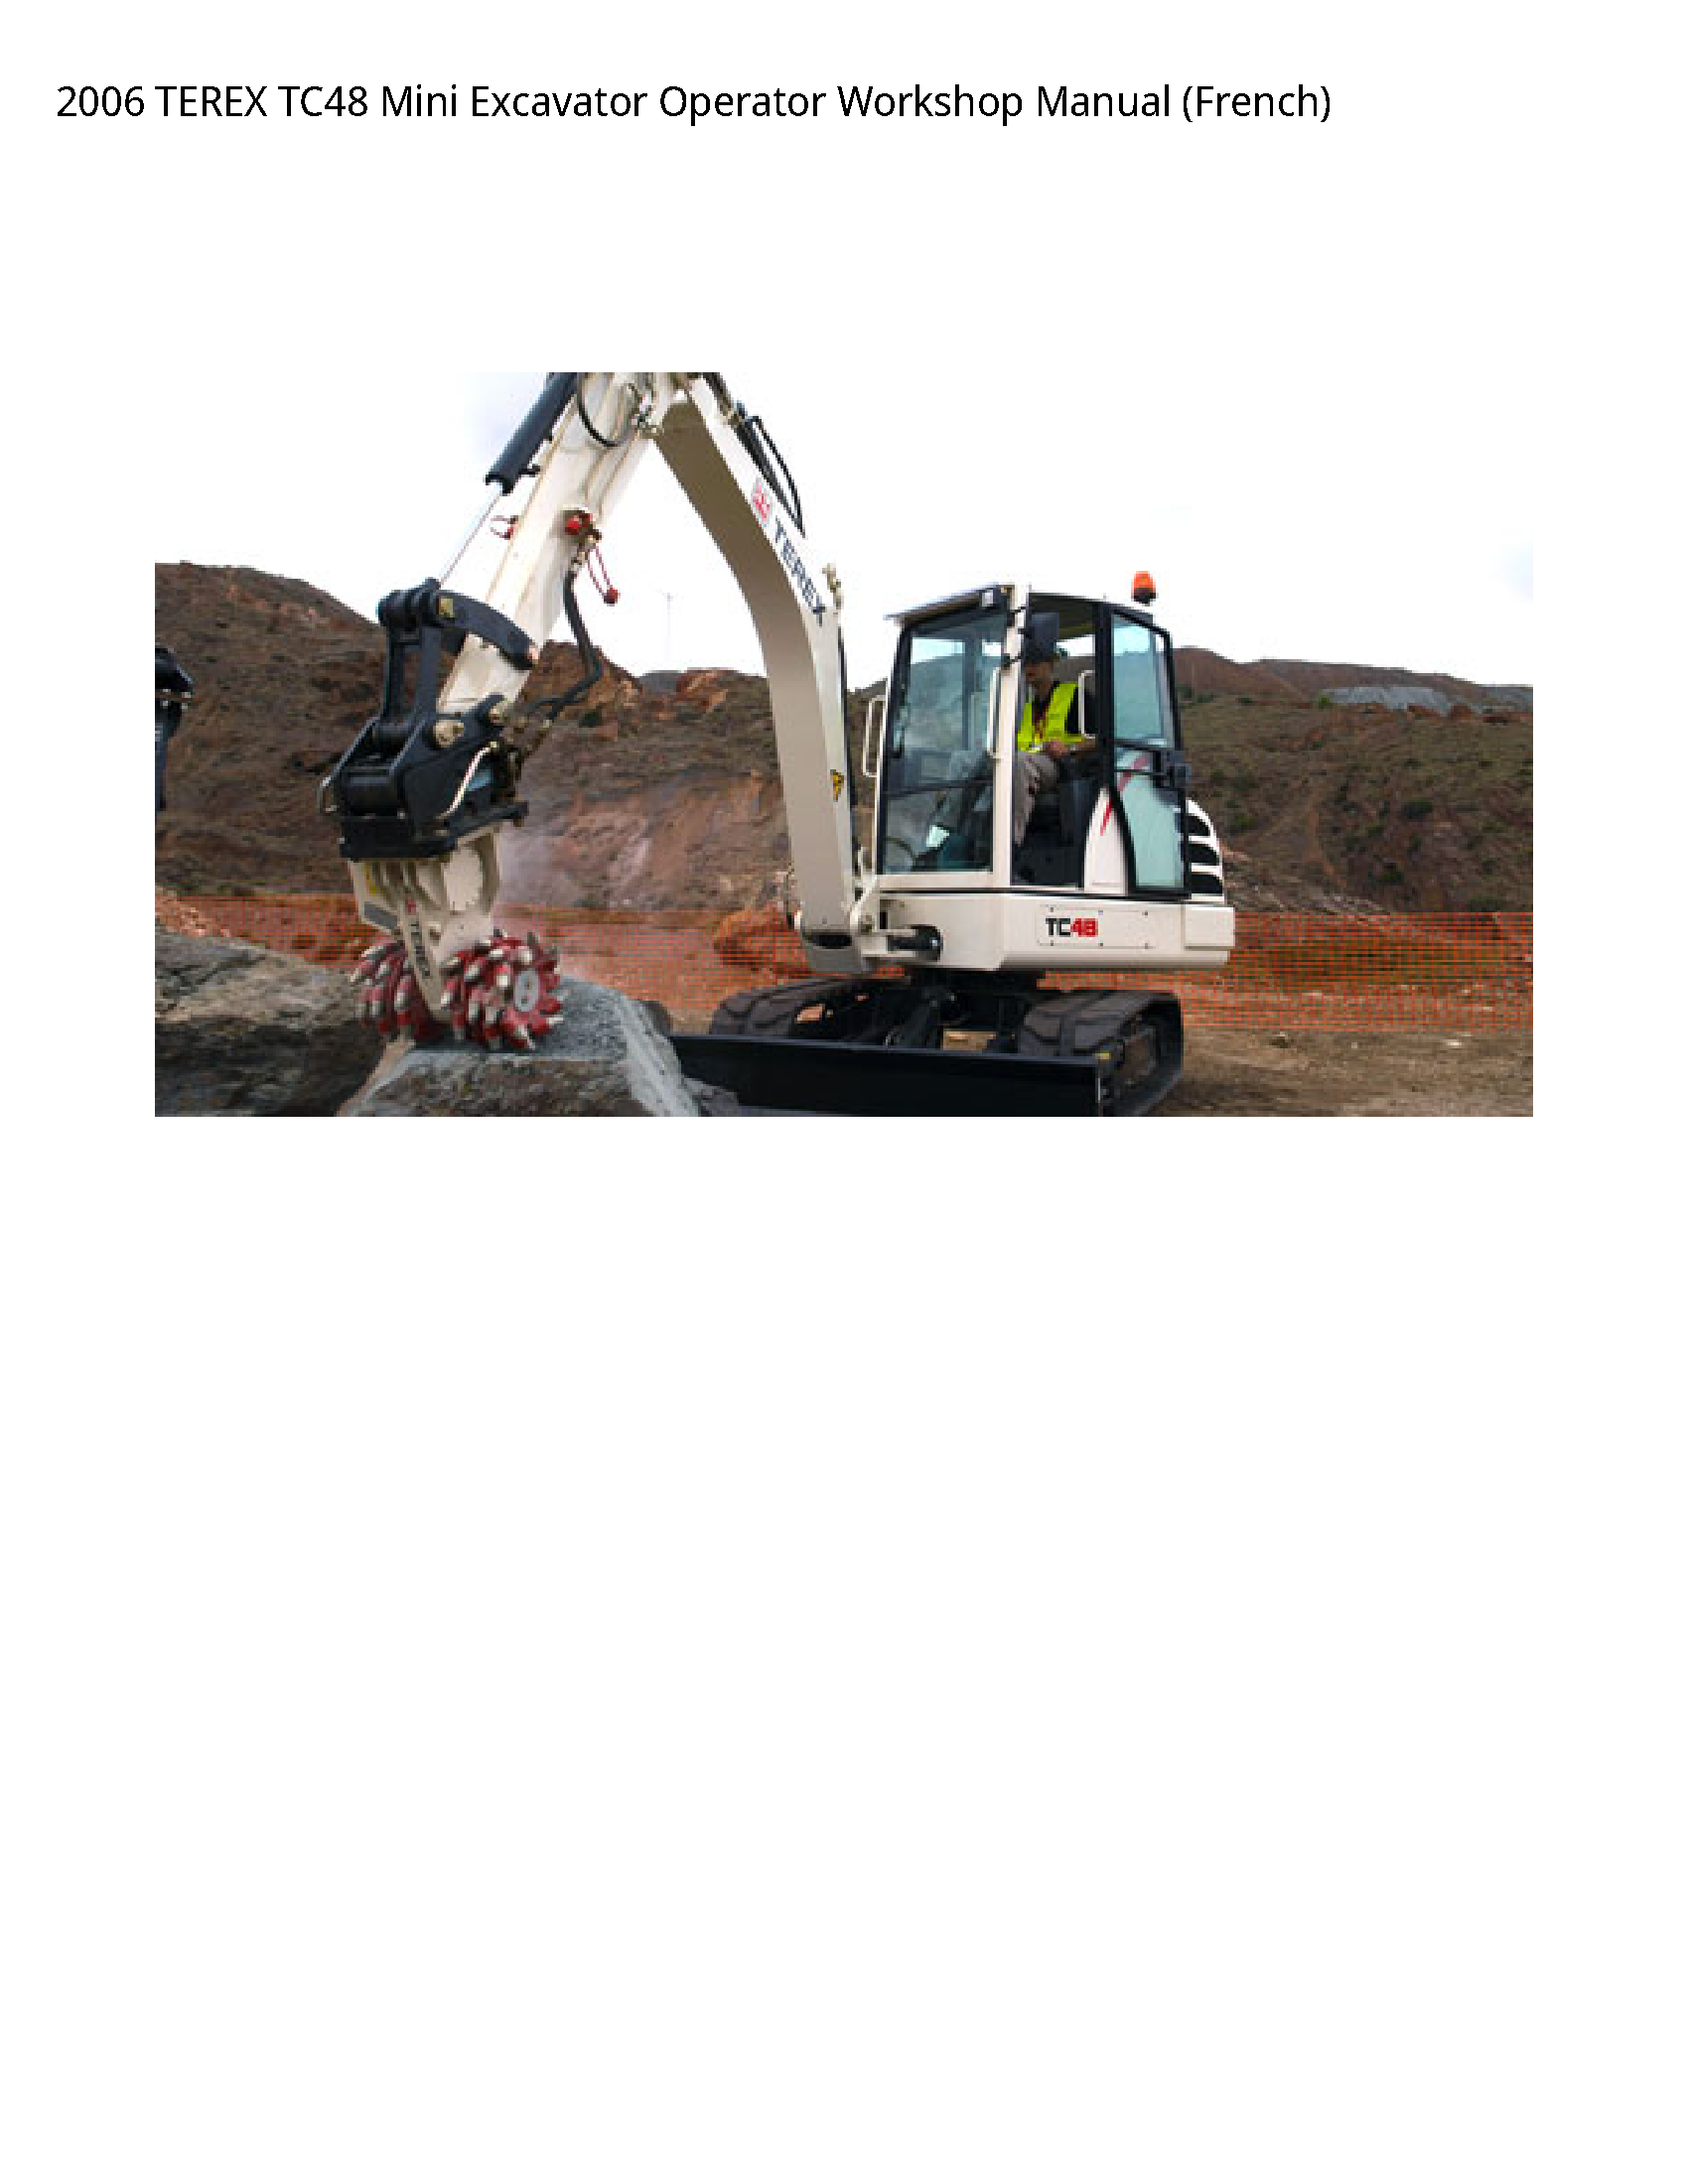 Terex TC48 Mini Excavator Operator manual